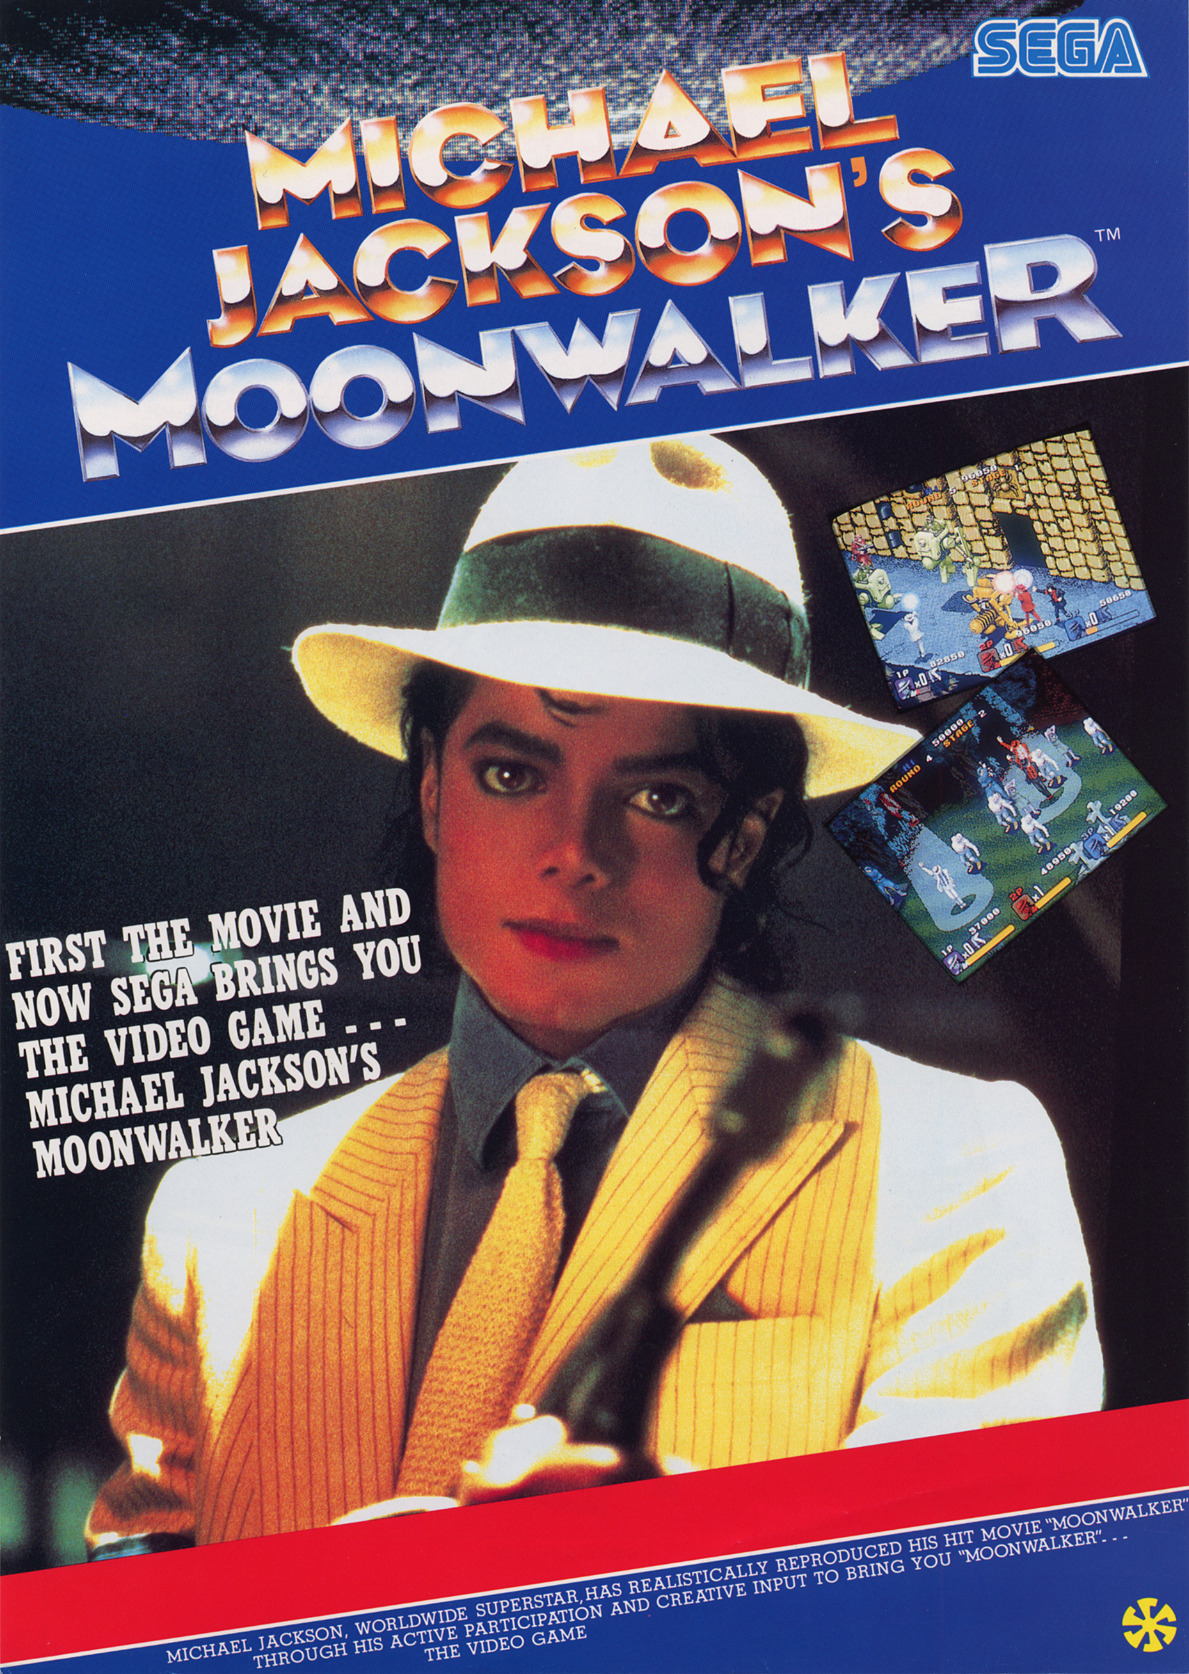 Michael jackson moonwalker. Michael Jackson Moonwalker Sega. Michael Jackson Sega game. Michael Jackson's Moonwalker обложка.